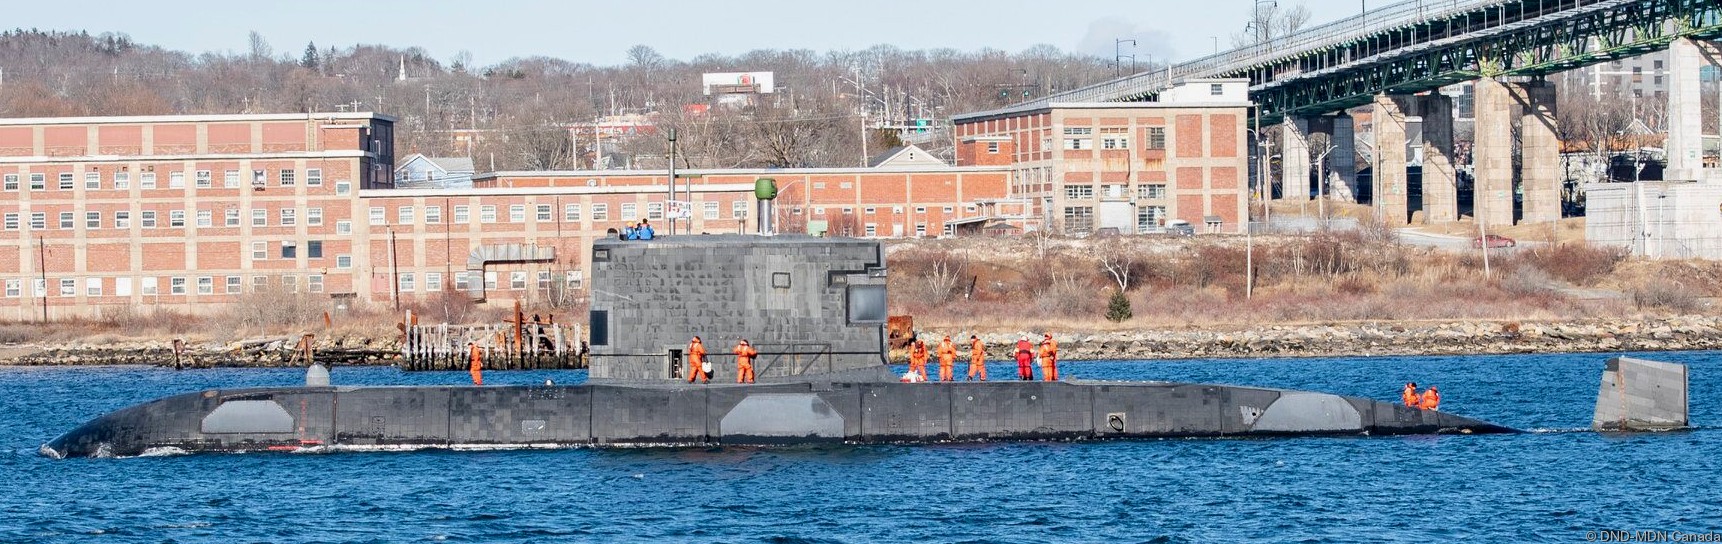 victoria class patrol submarine ssk hunter killer upholder royal canadian navy hmcs ncsm 05c